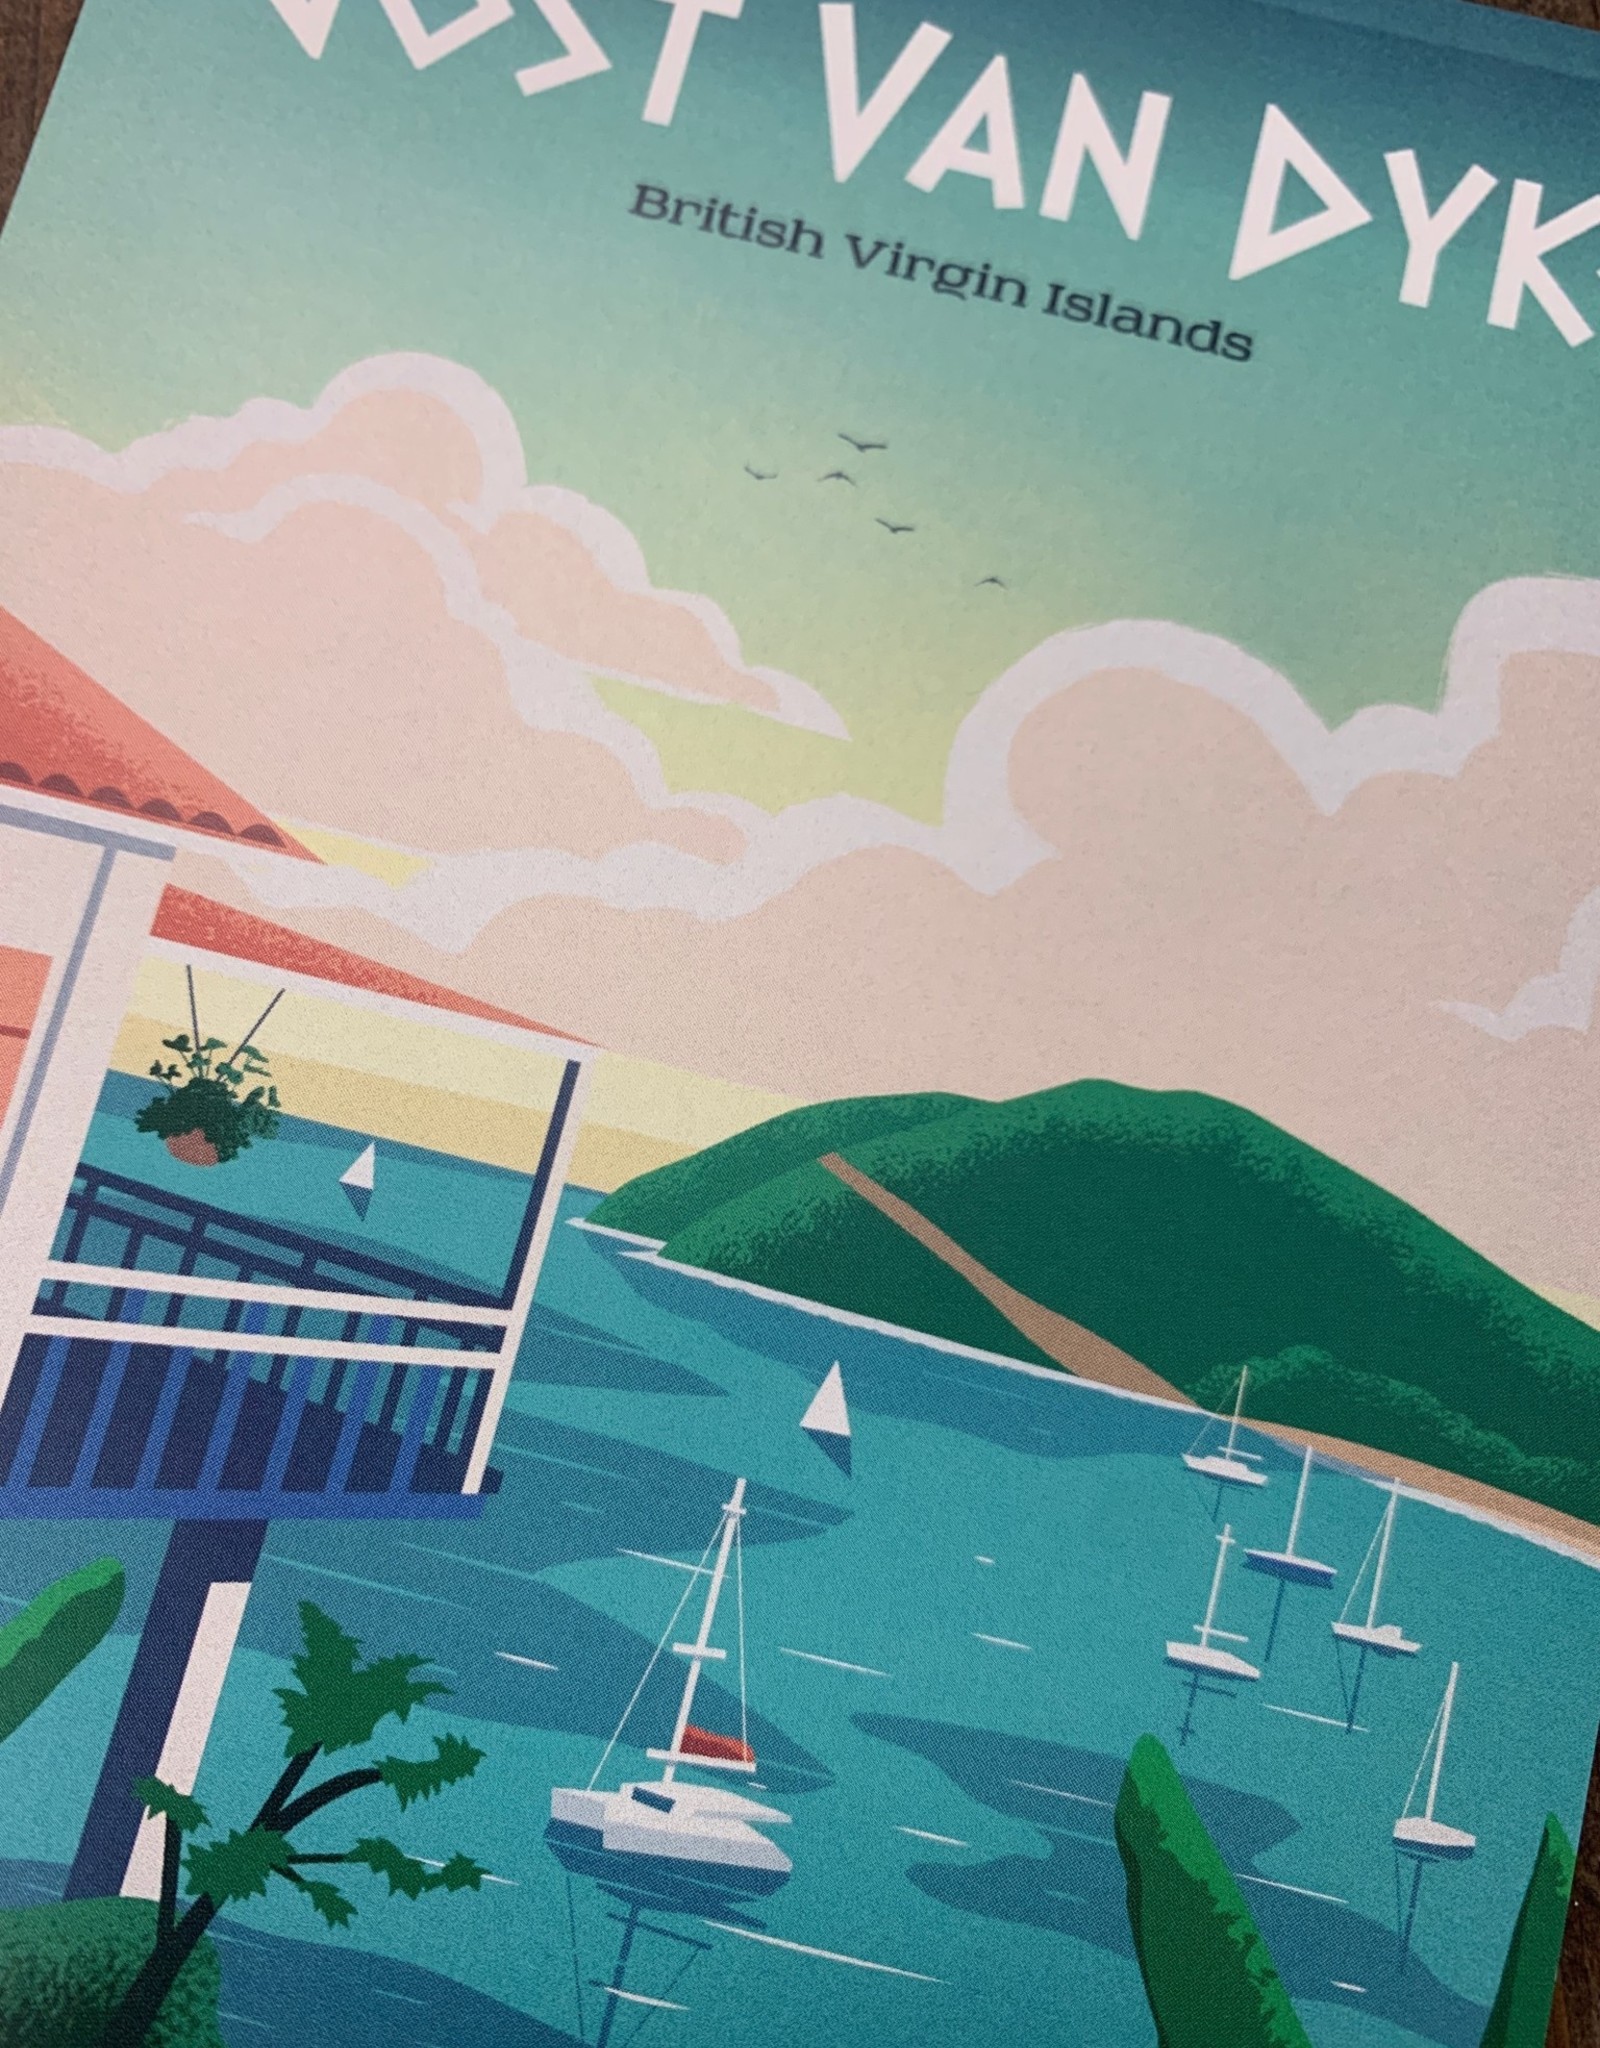 BVI Retro travel poster - Jost Van Dyke - Giclee print 12" x 16"